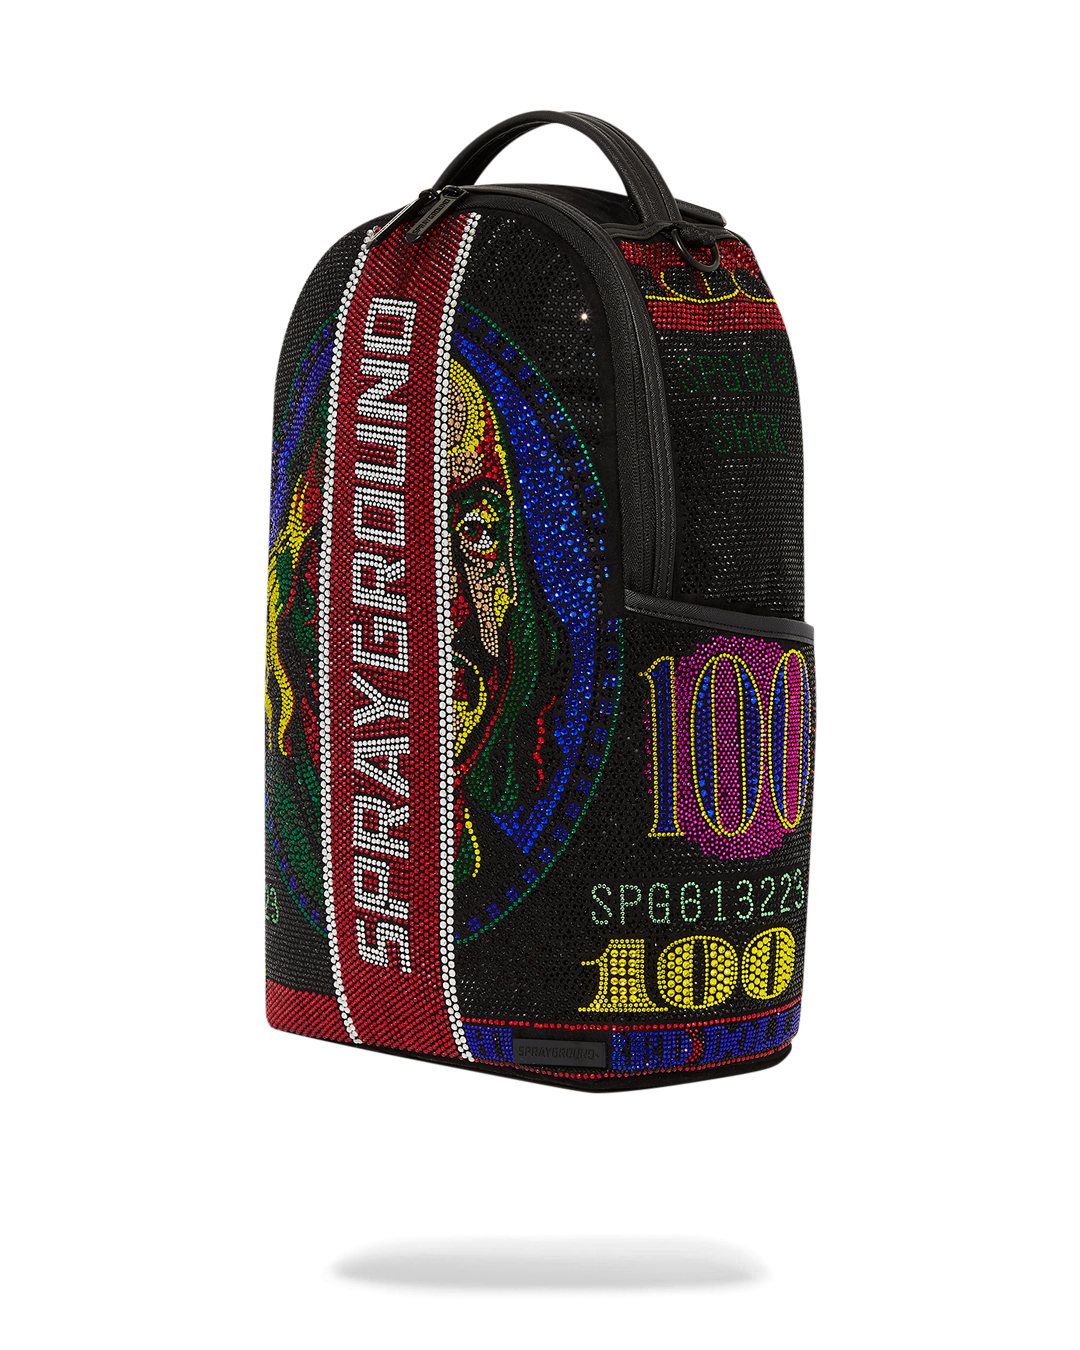 100 Bags ideas  bags, backpacks, sprayground